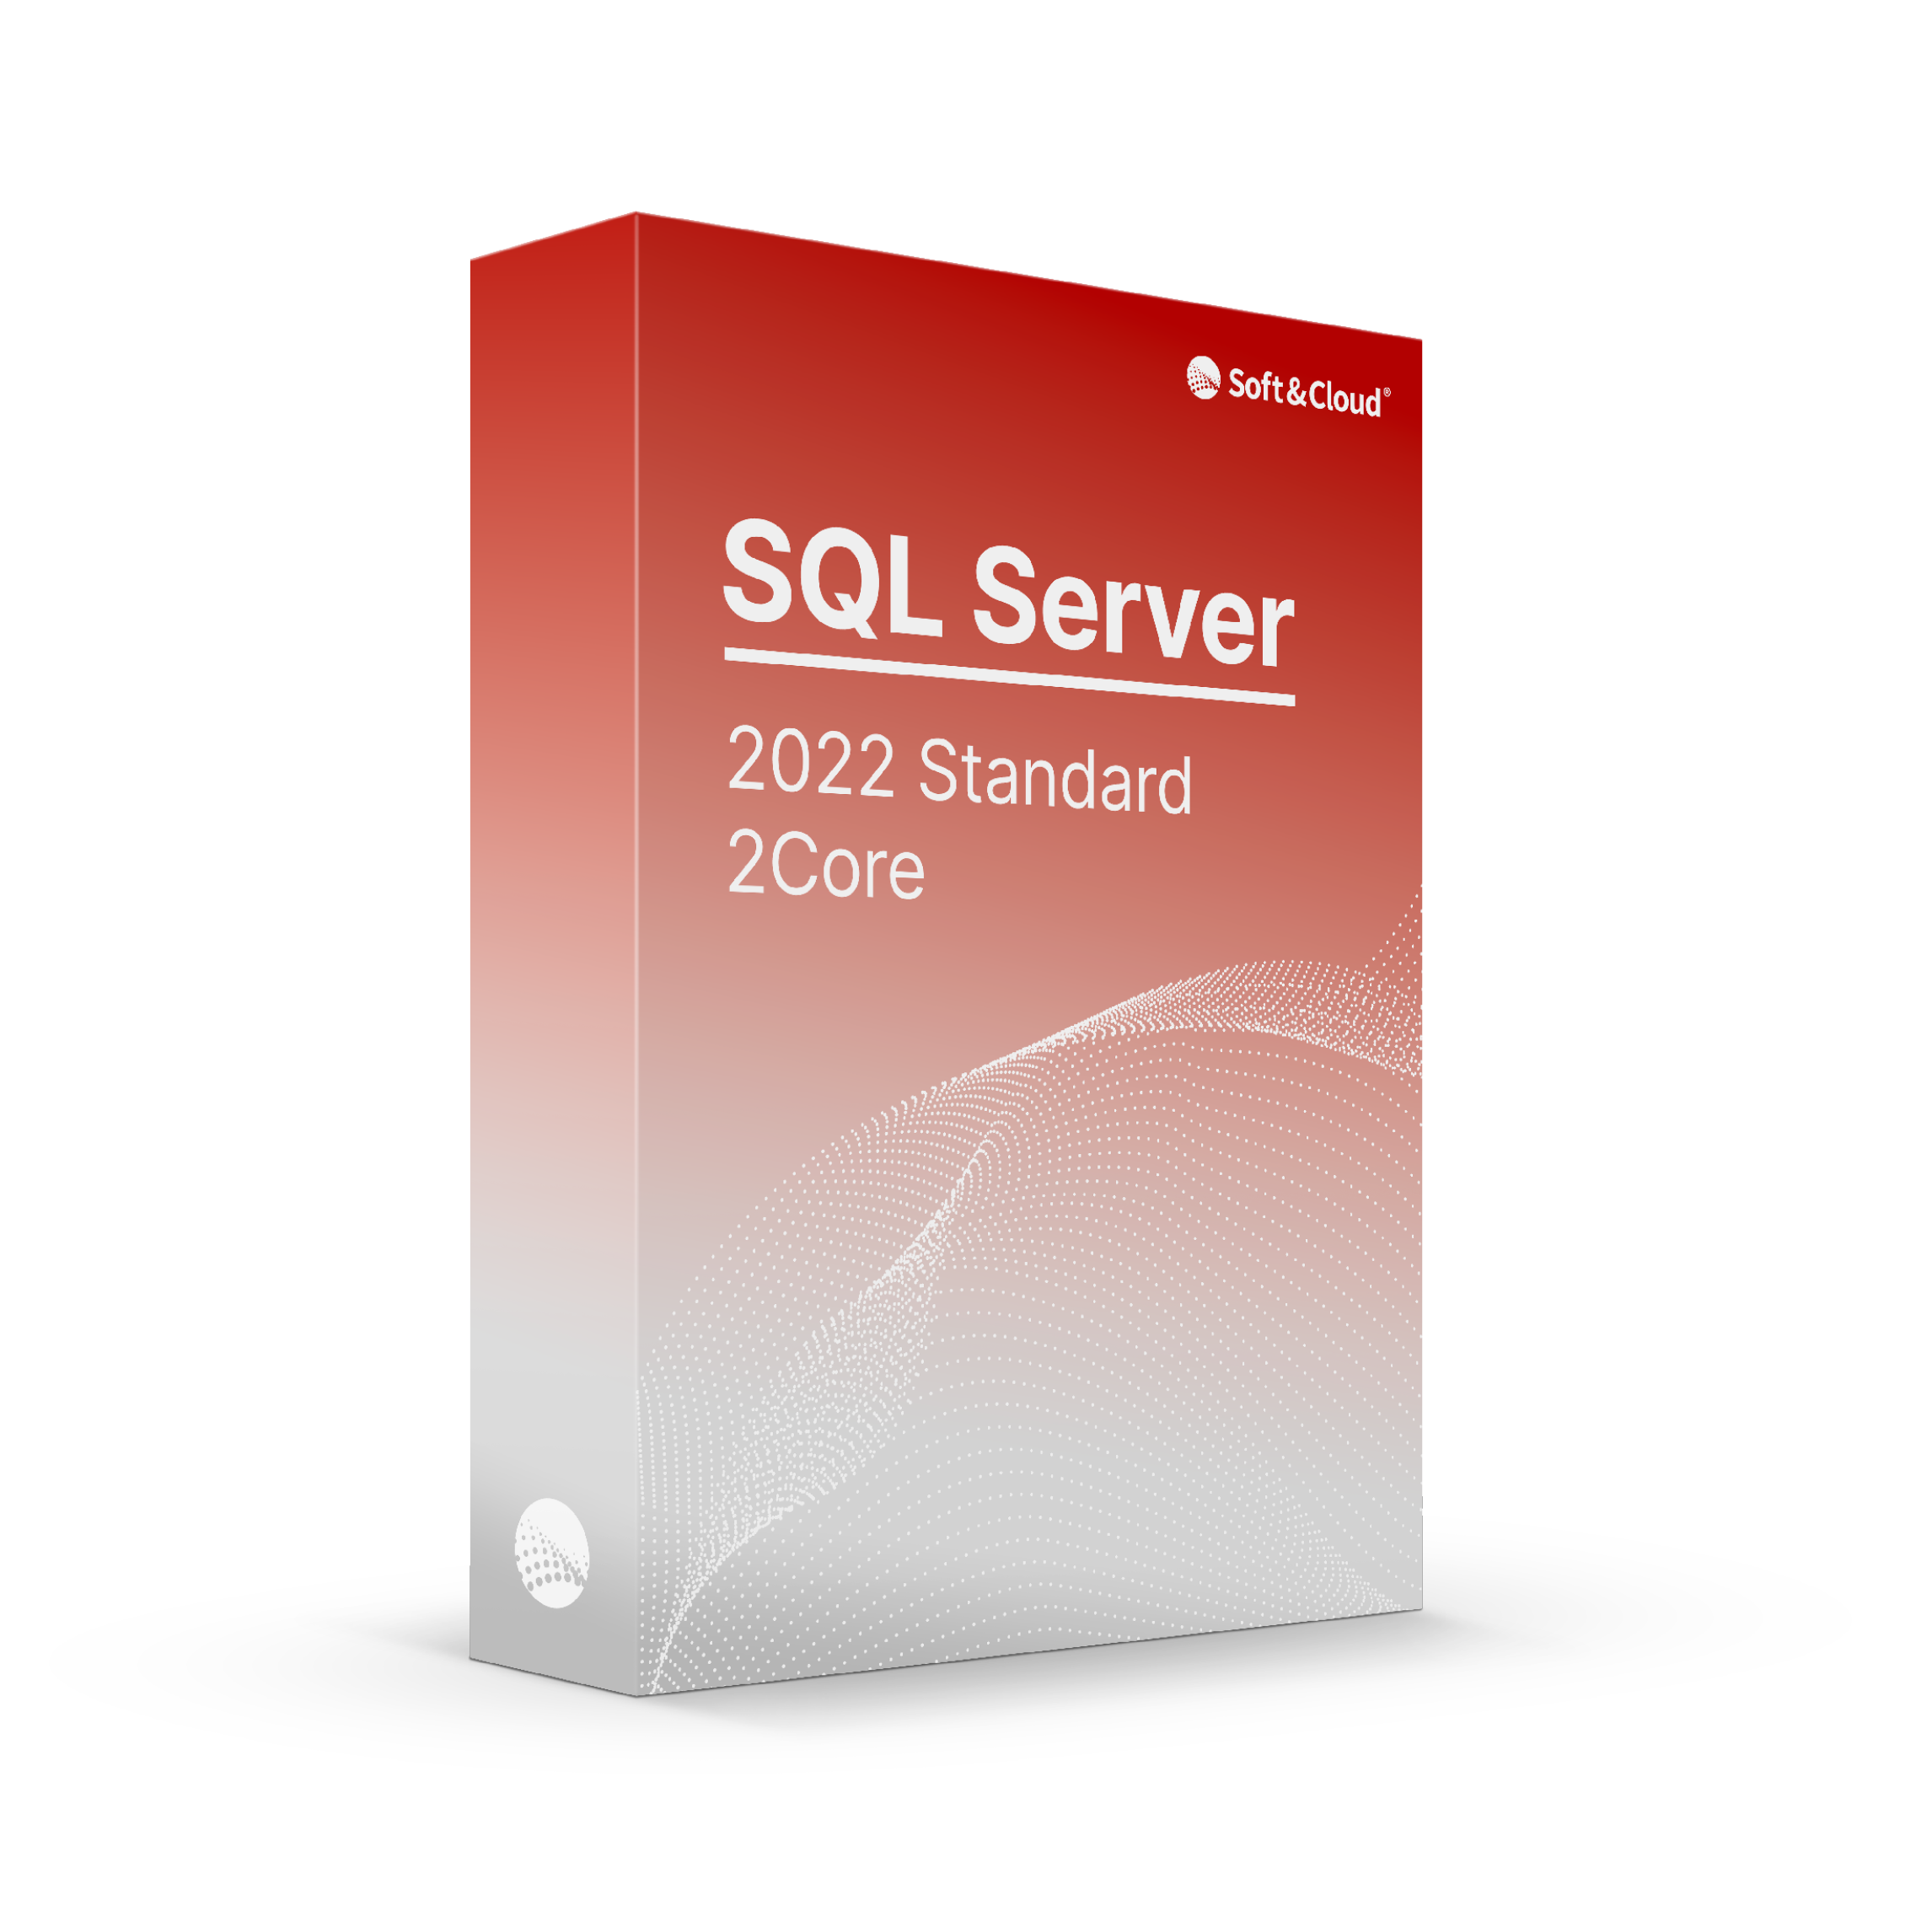 SQL Server 2022 Standard 2Core